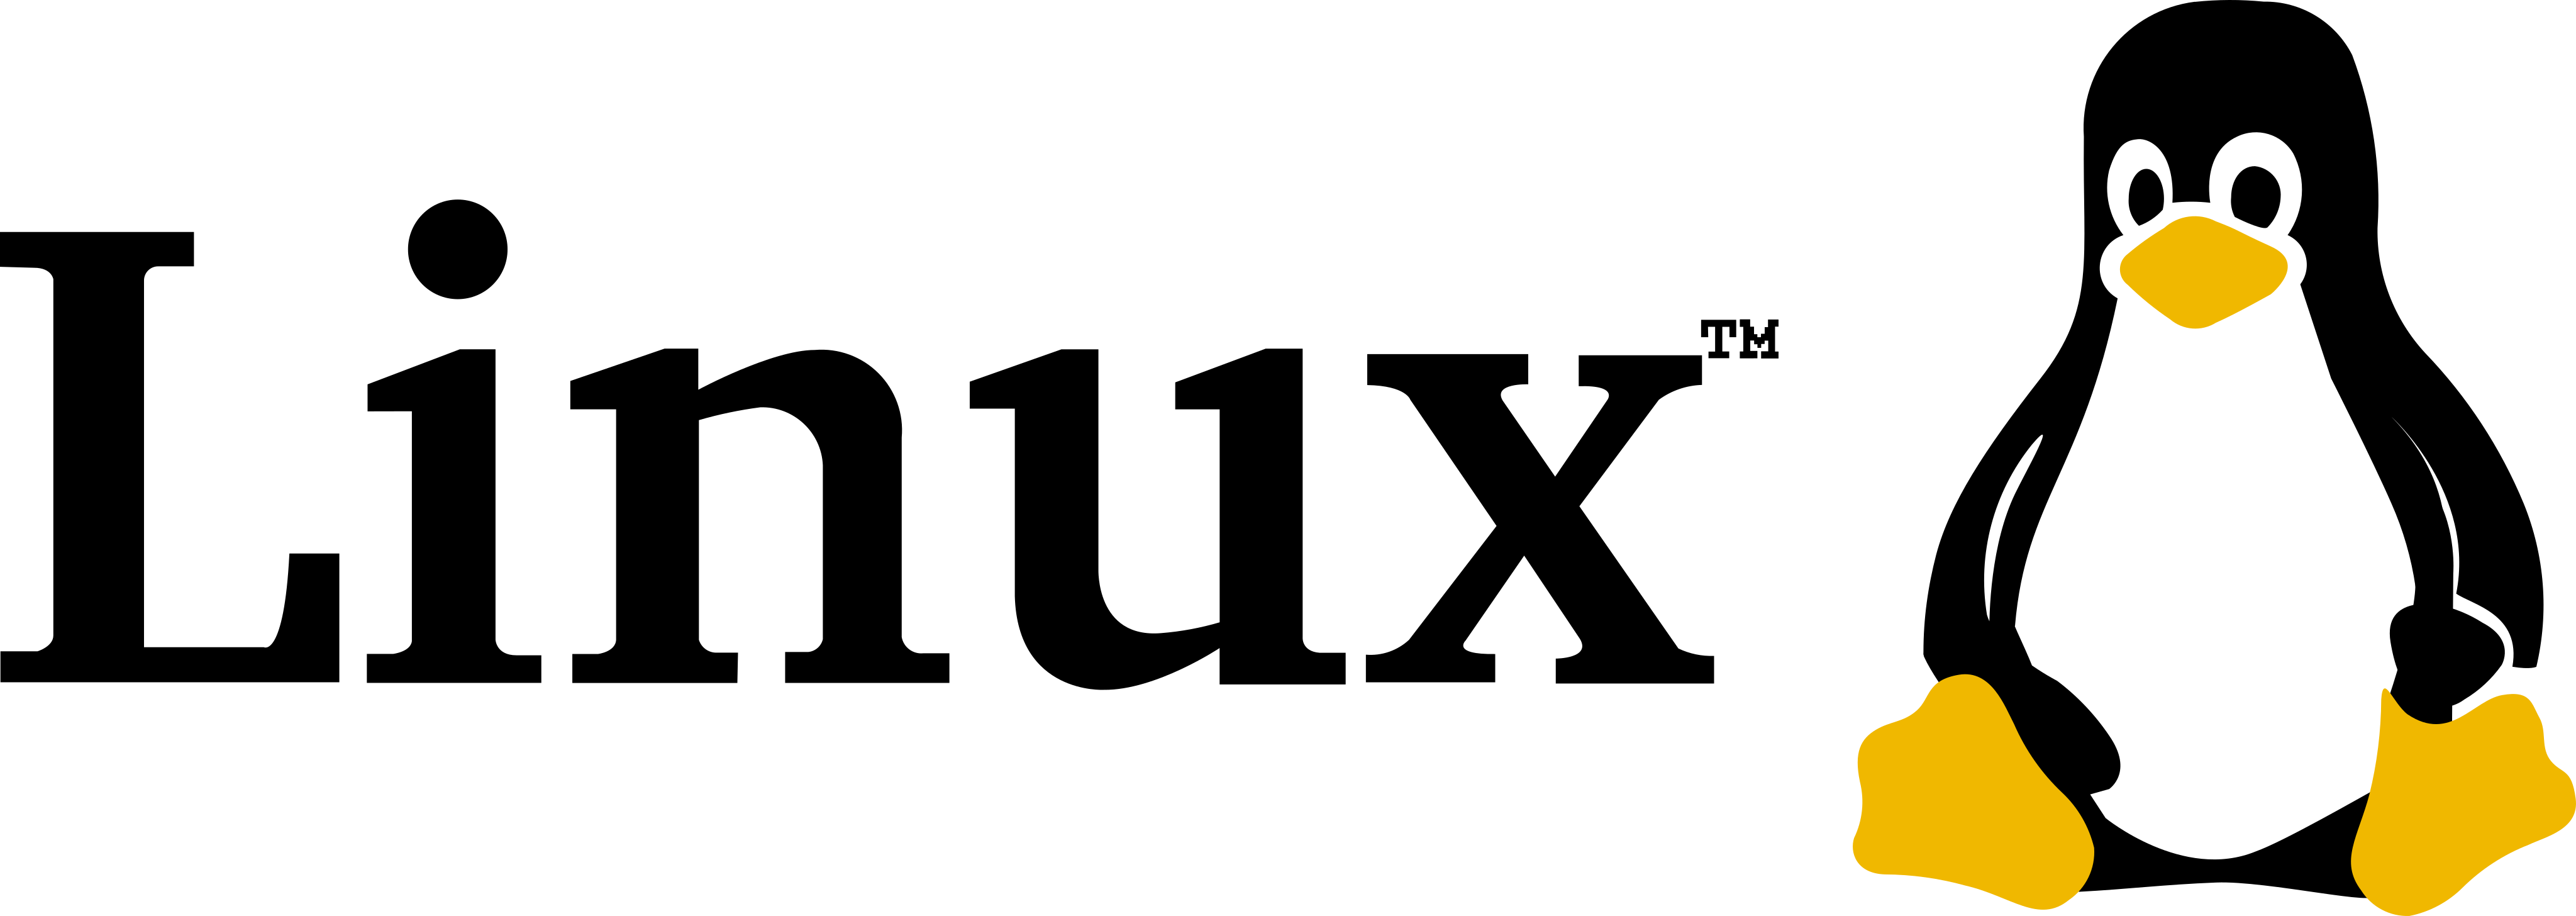 Linux Logo.